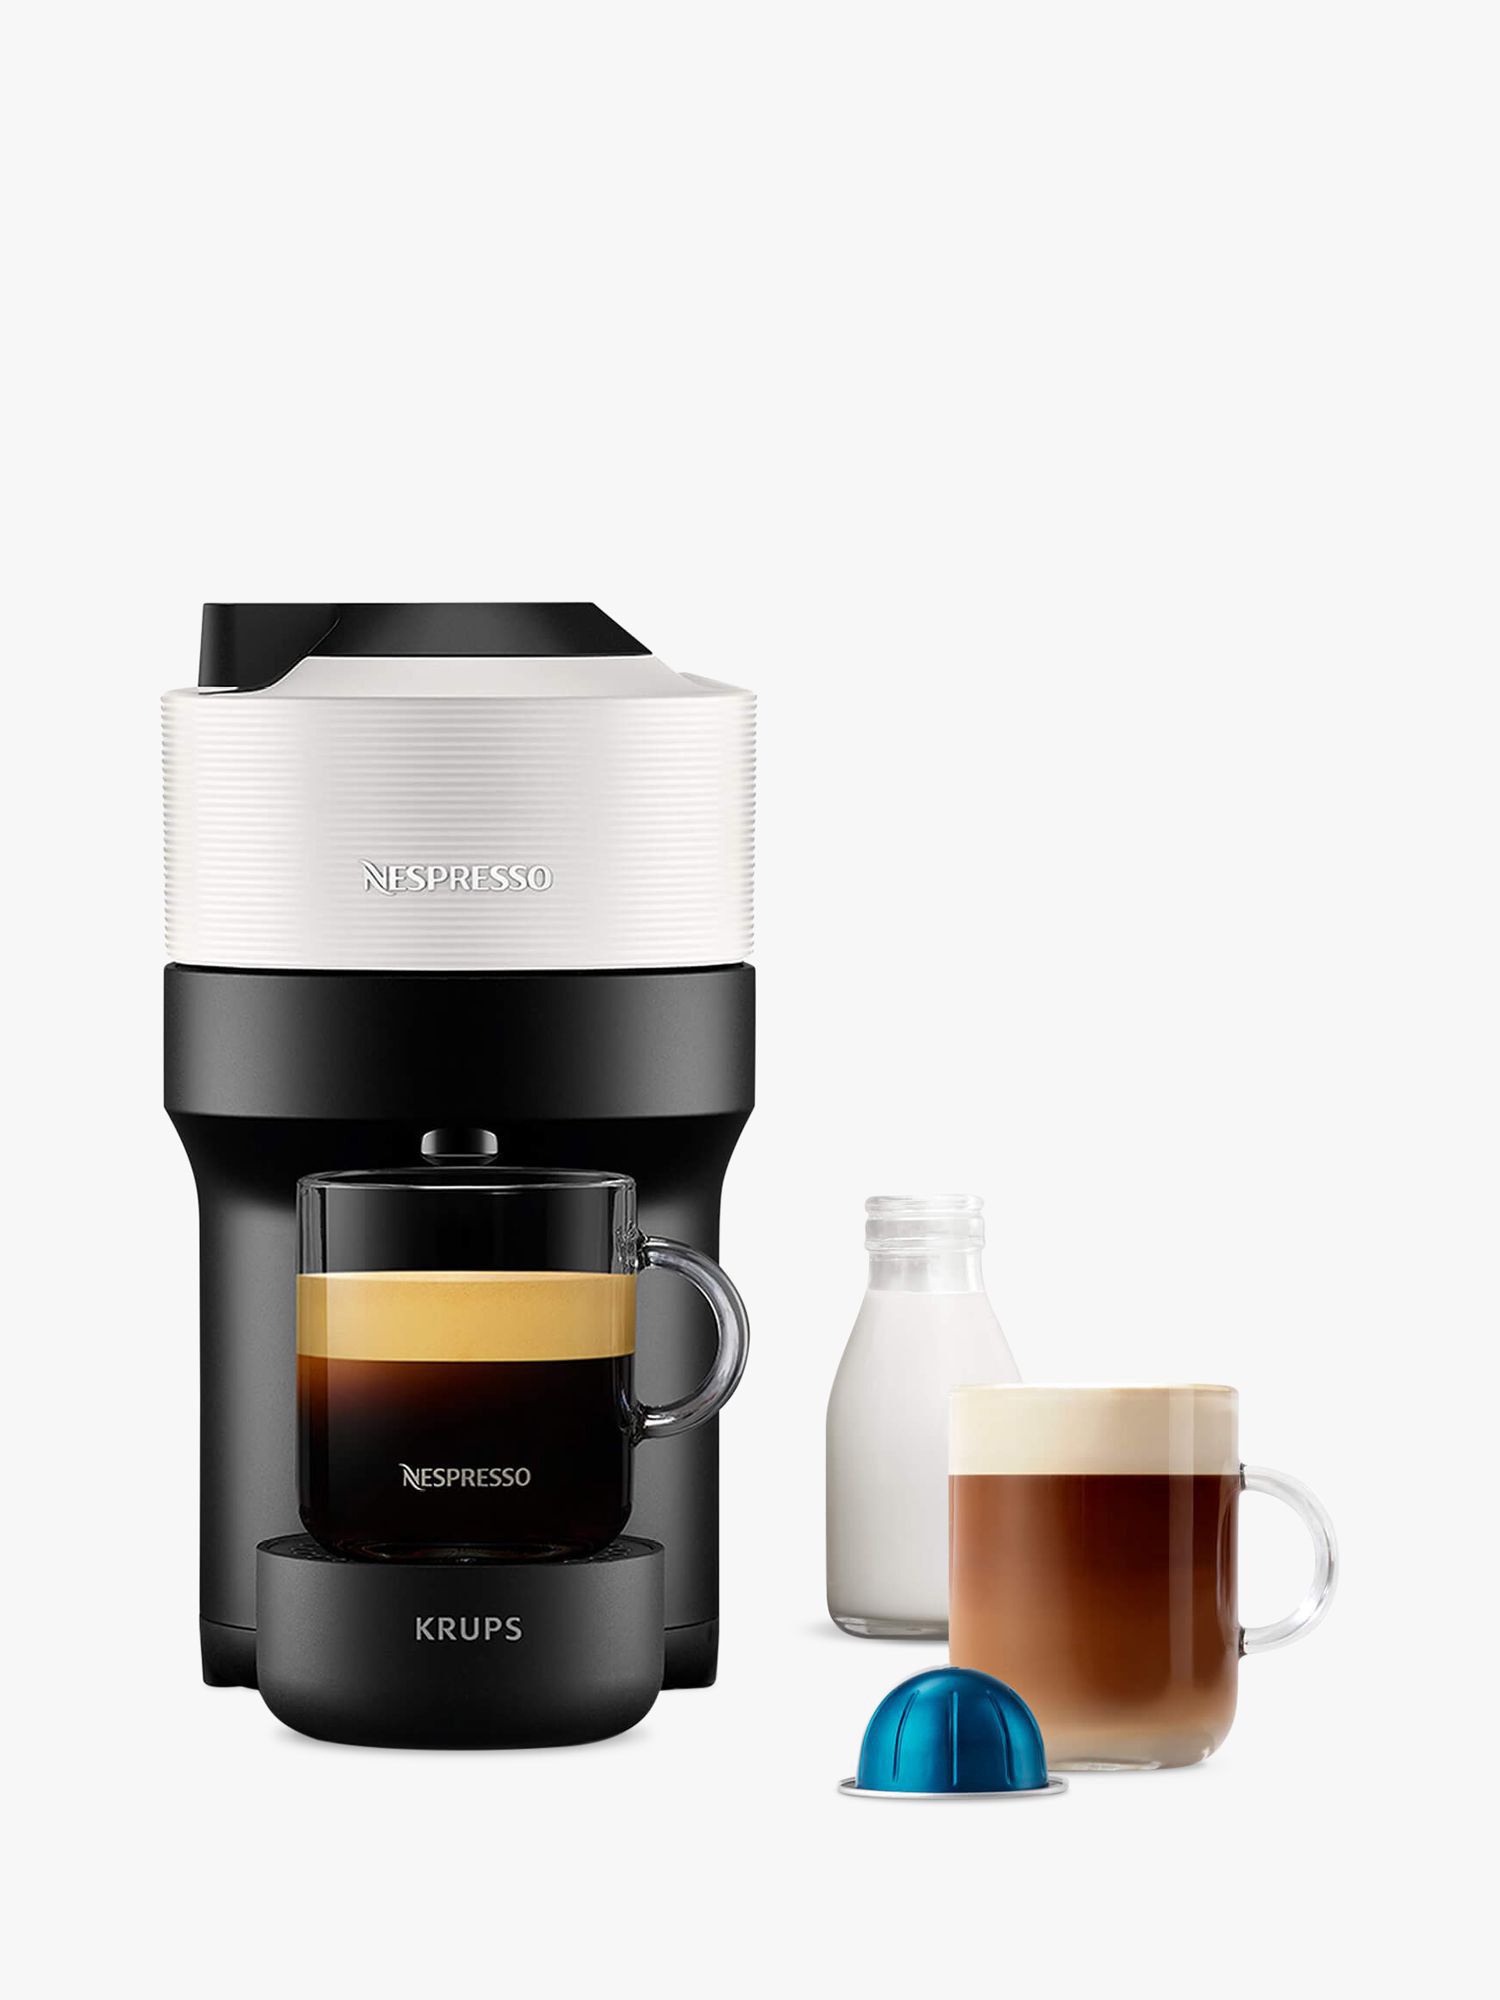 Nespresso coffee machine on a white background